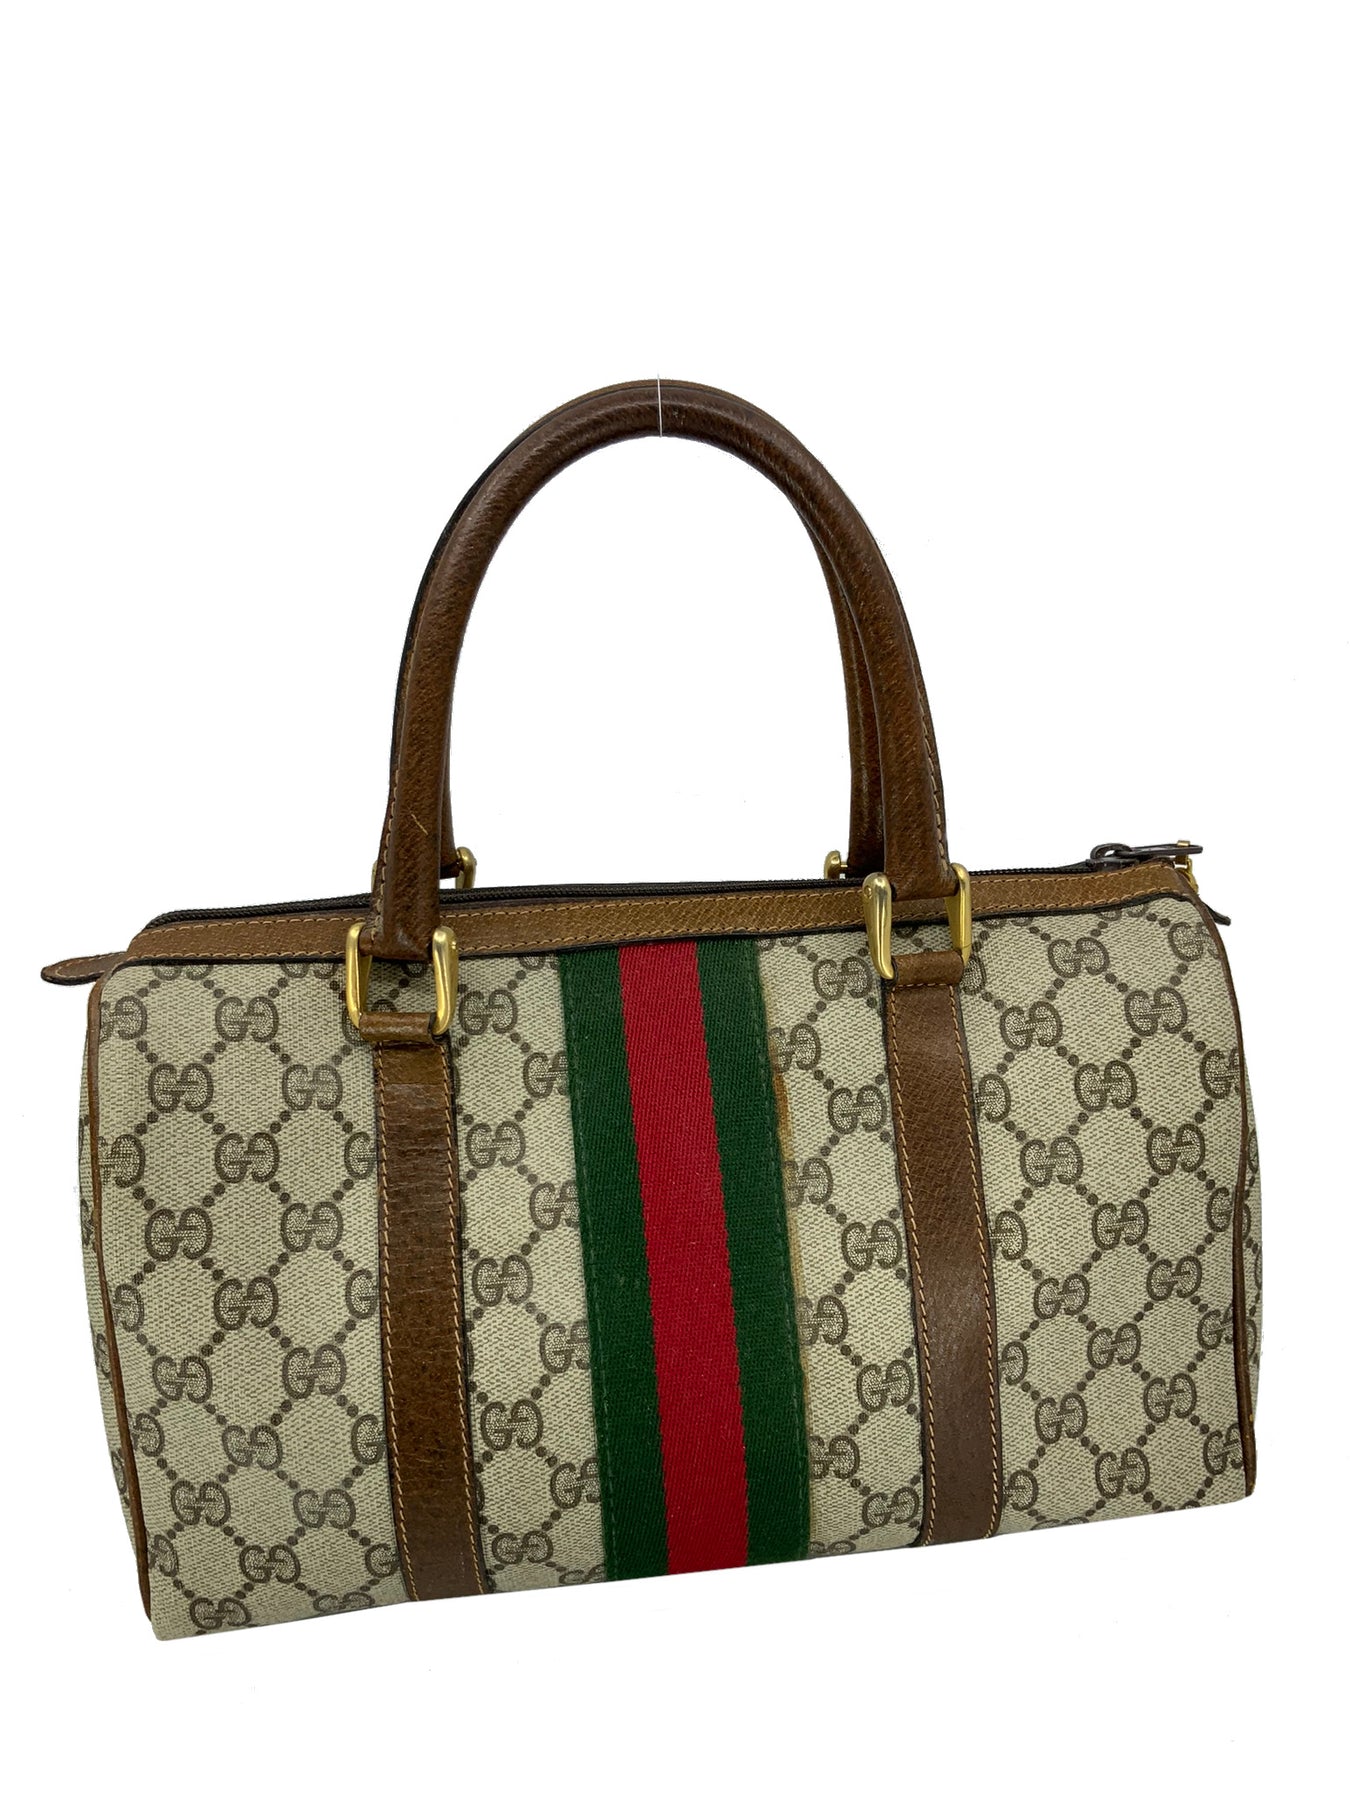 Gucci, Bags, Offerslarge Gucci Boston Bag